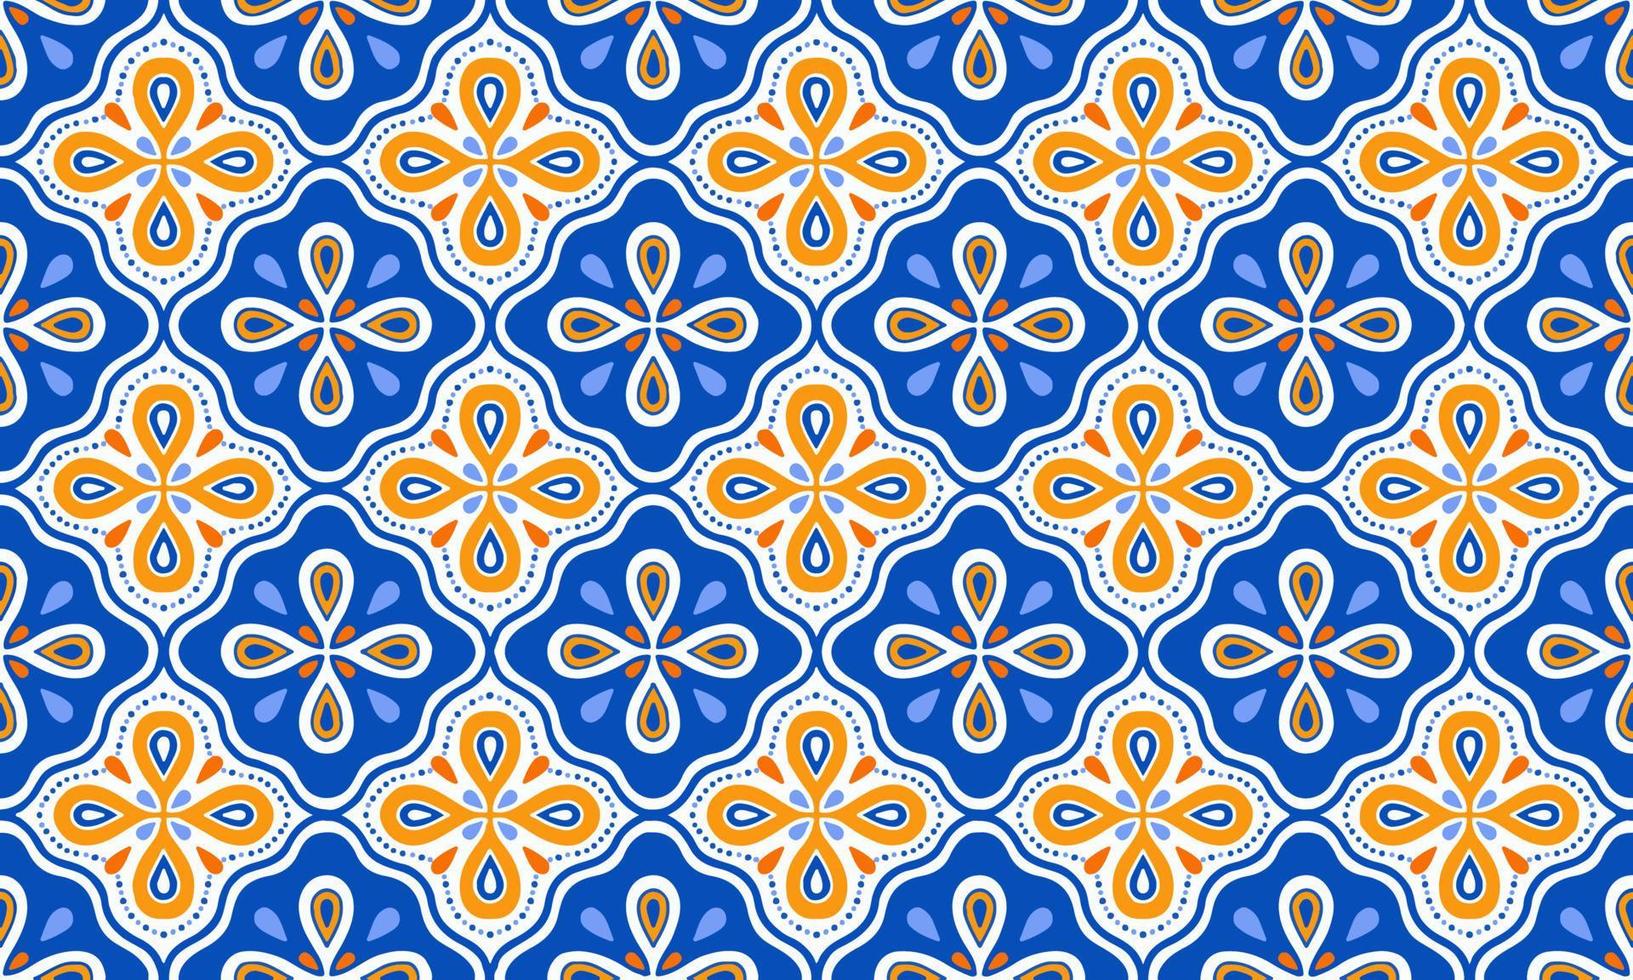 Ethnic Abstract Background cute orange blue Flower geometric tribal ikat folk Motif Arabic oriental native pattern traditional design carpet wallpaper clothing fabric wrapping print batik folk vector